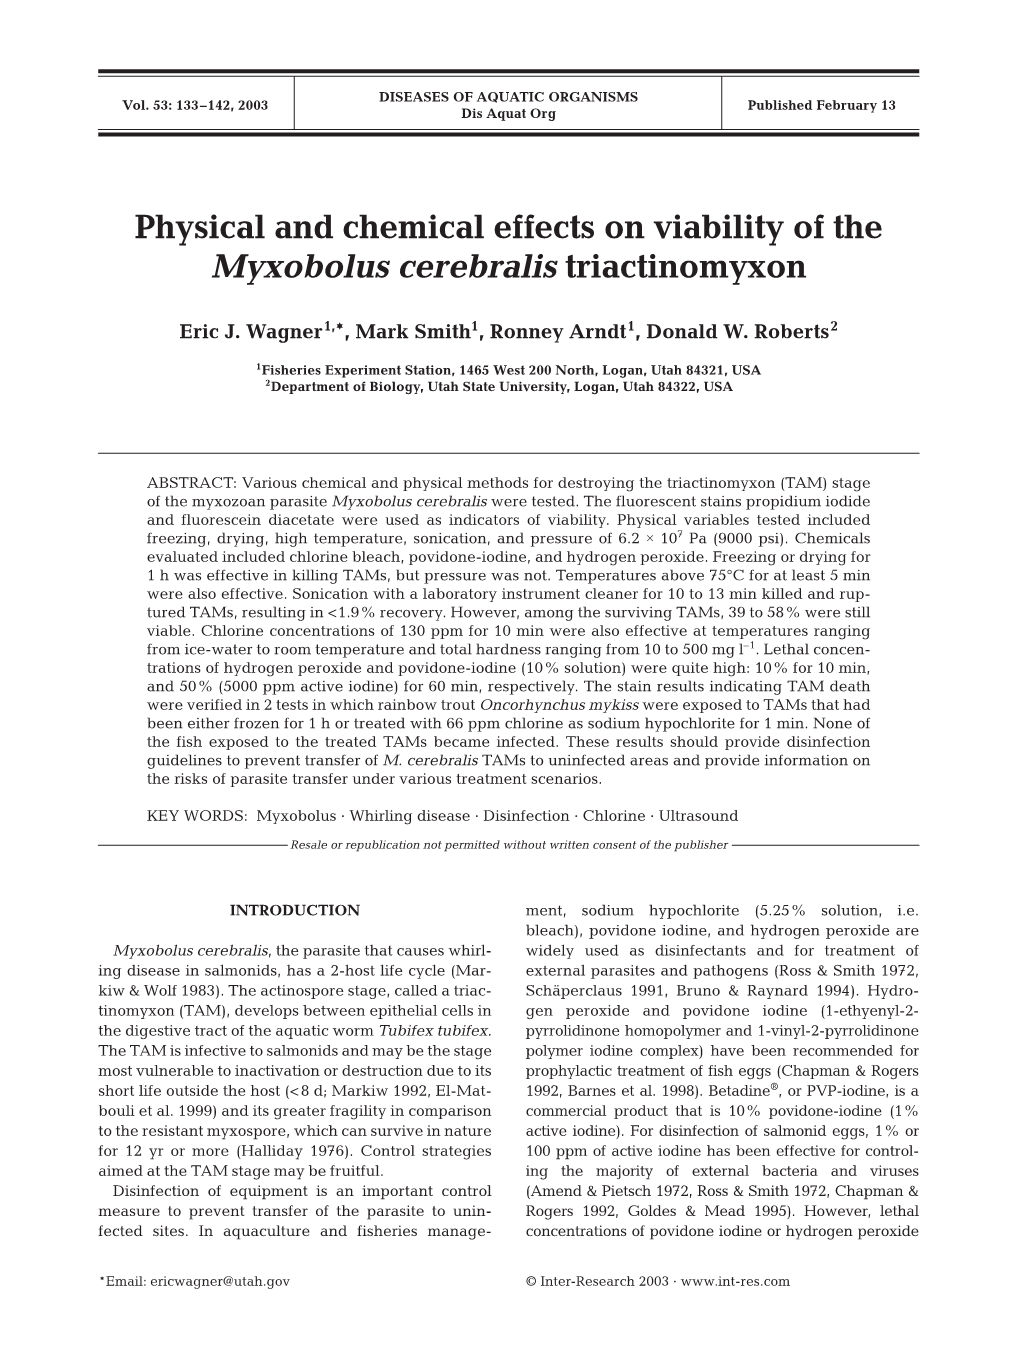 Physical and Chemical Effects on Viability of the Myxobolus Cerebralis Triactinomyxon